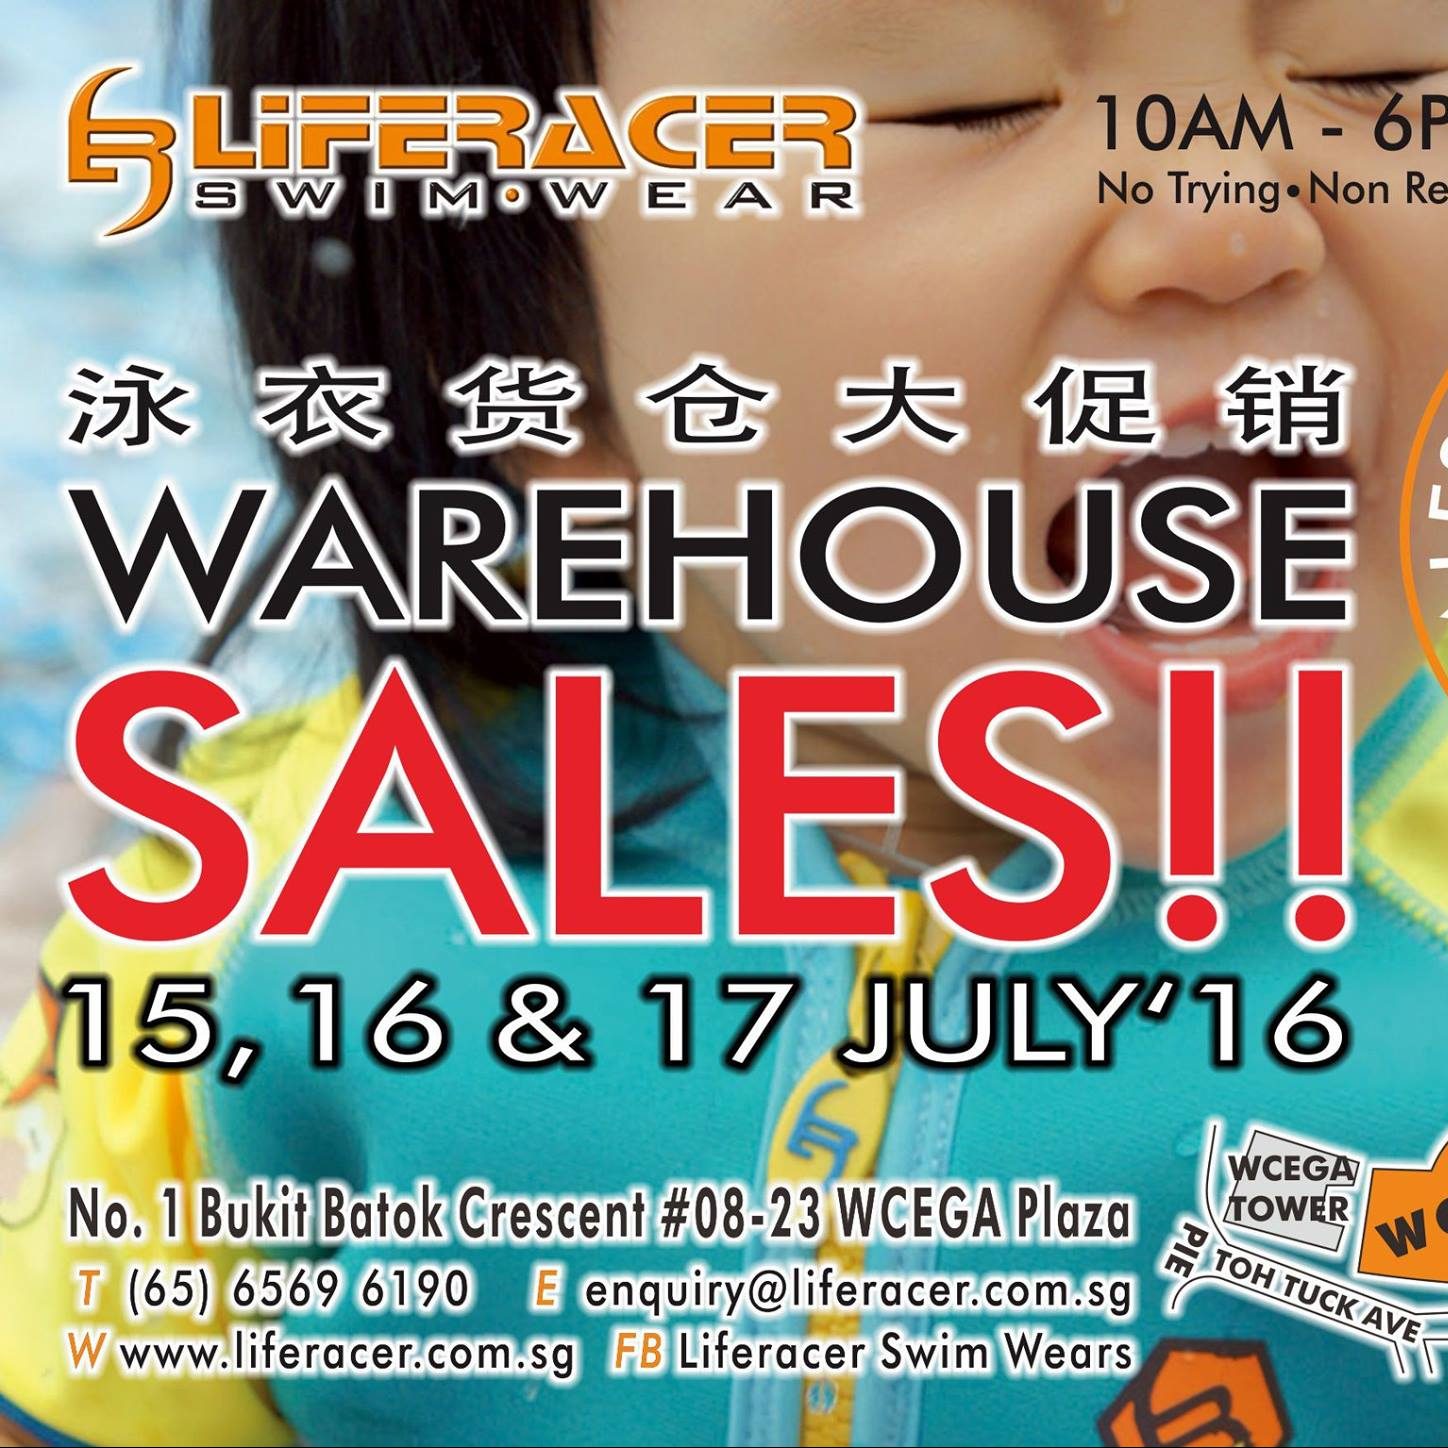 Liferacer Warehouse Sale Singapore Promotion 15 to 17 Jul 2016